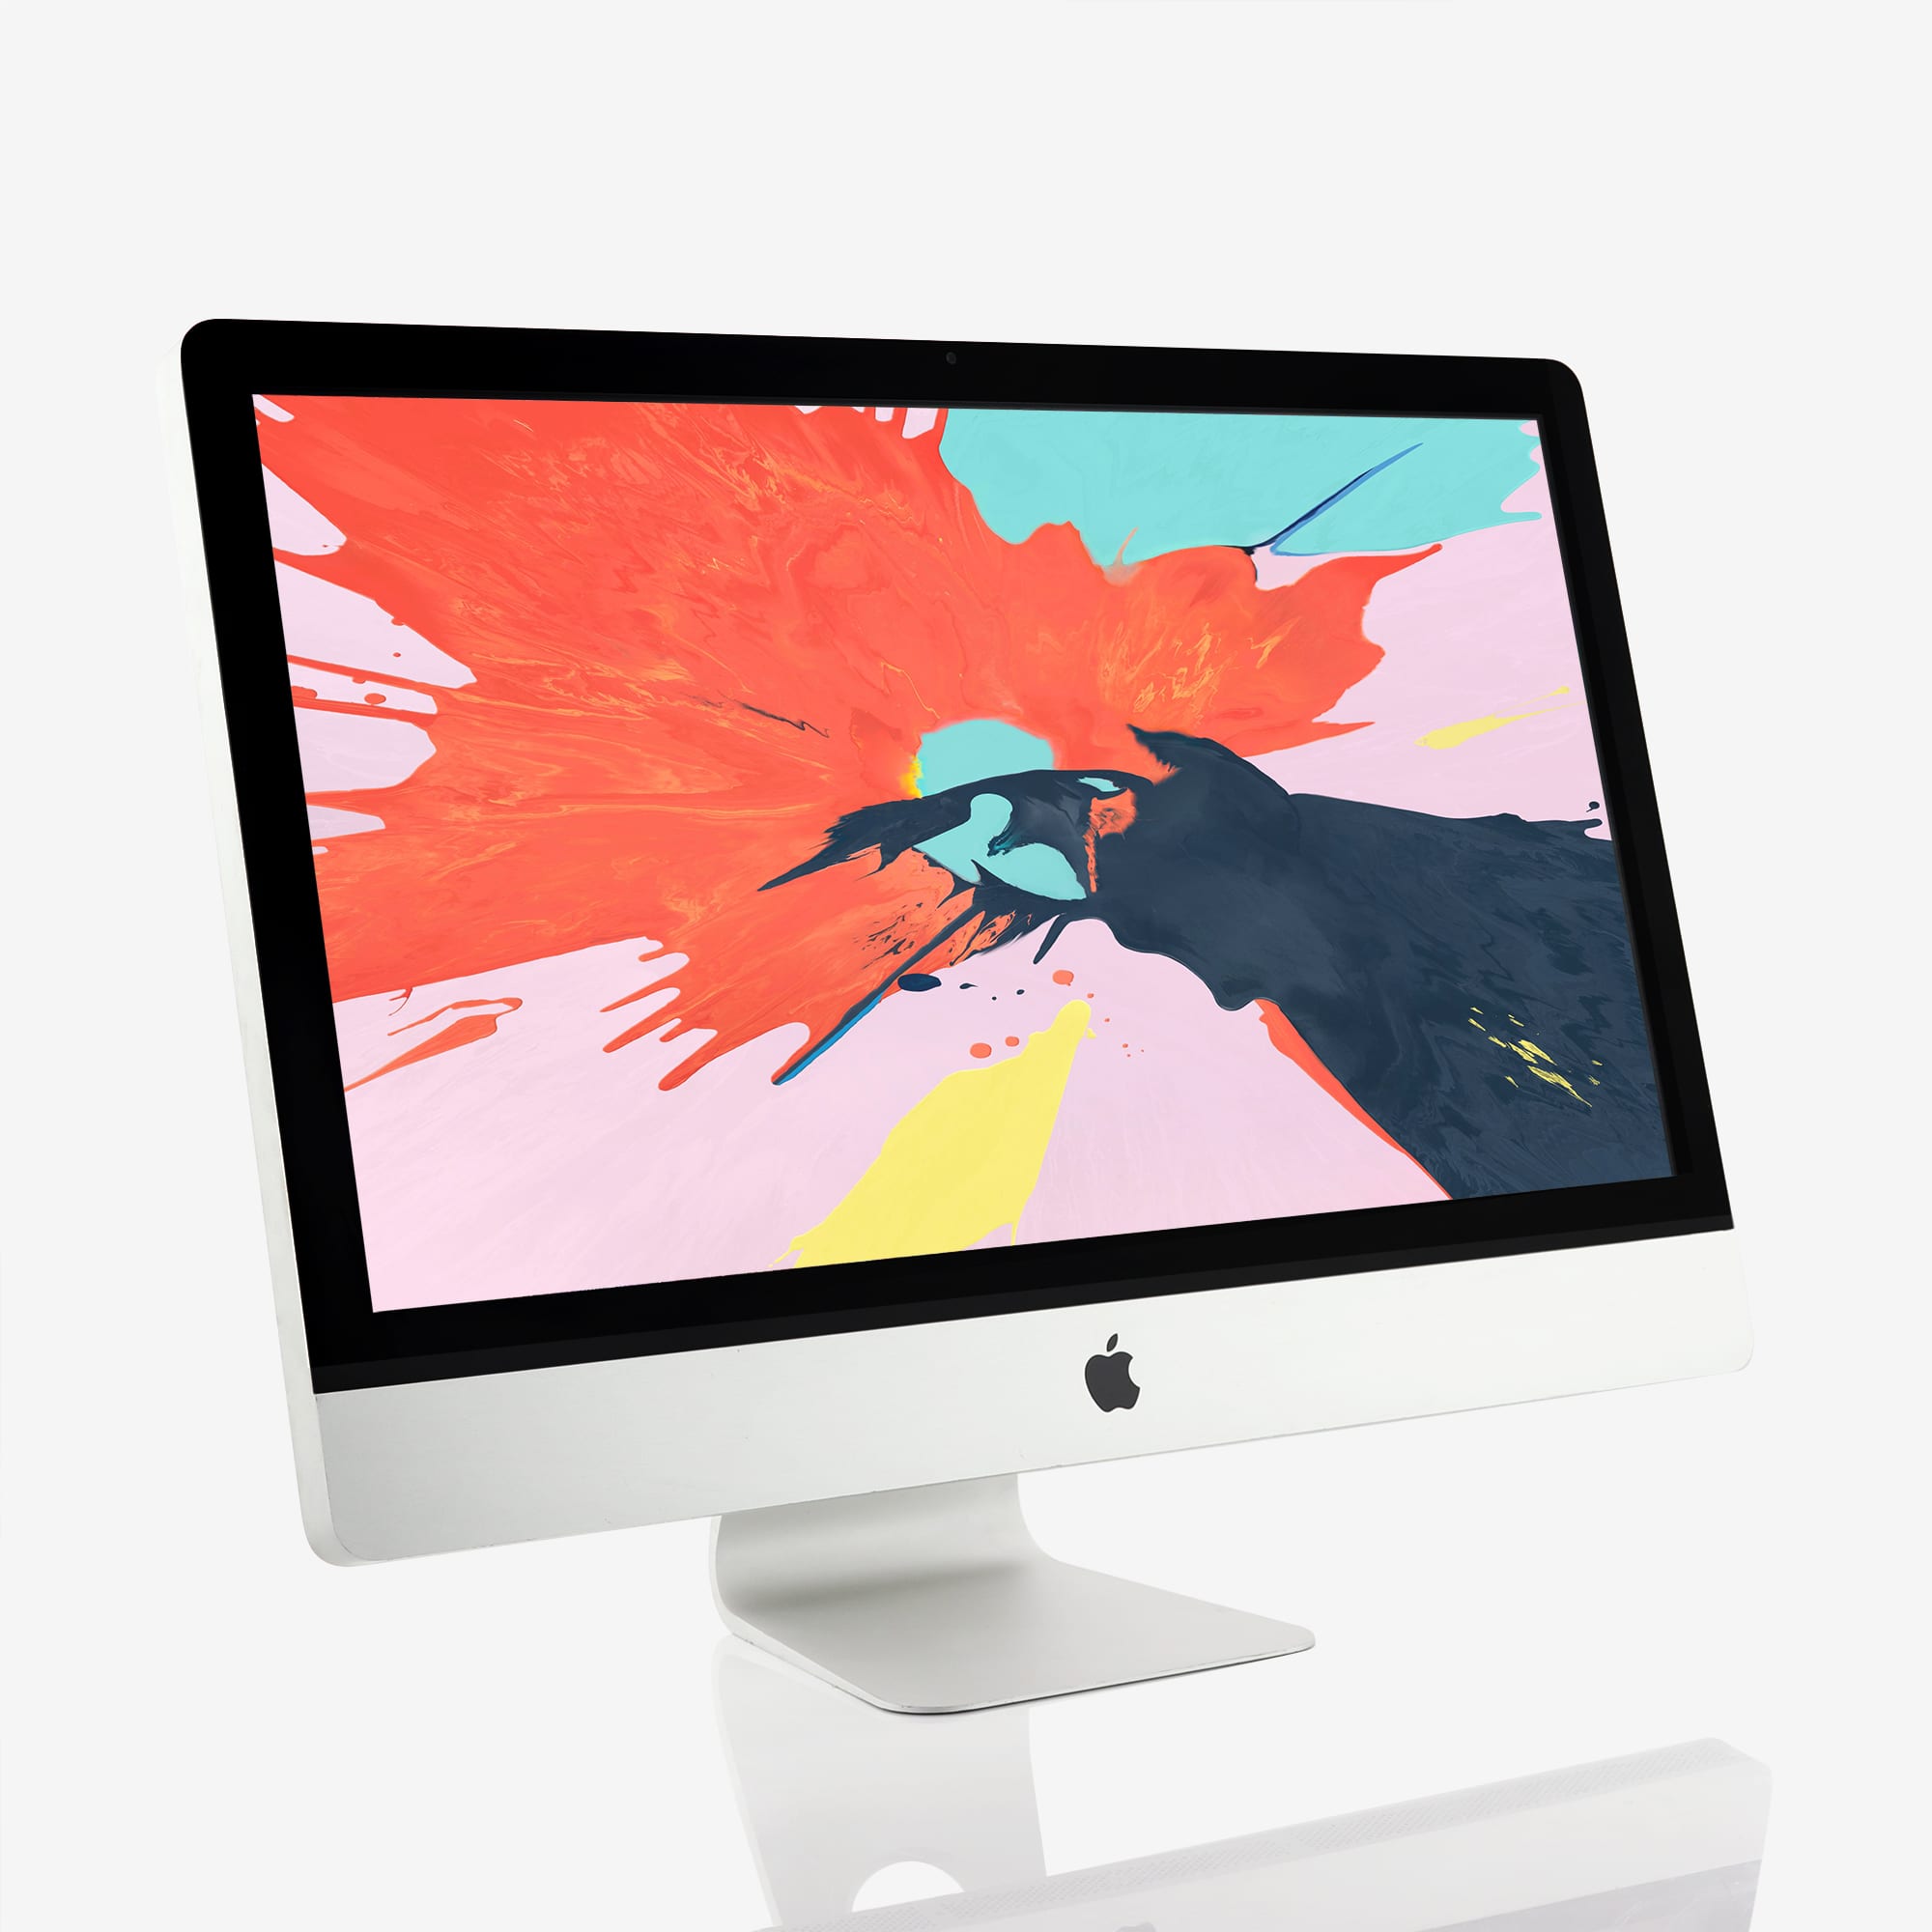 1 x Apple iMac 27 Inch Quad Core i5 2.70 GHz (2011)